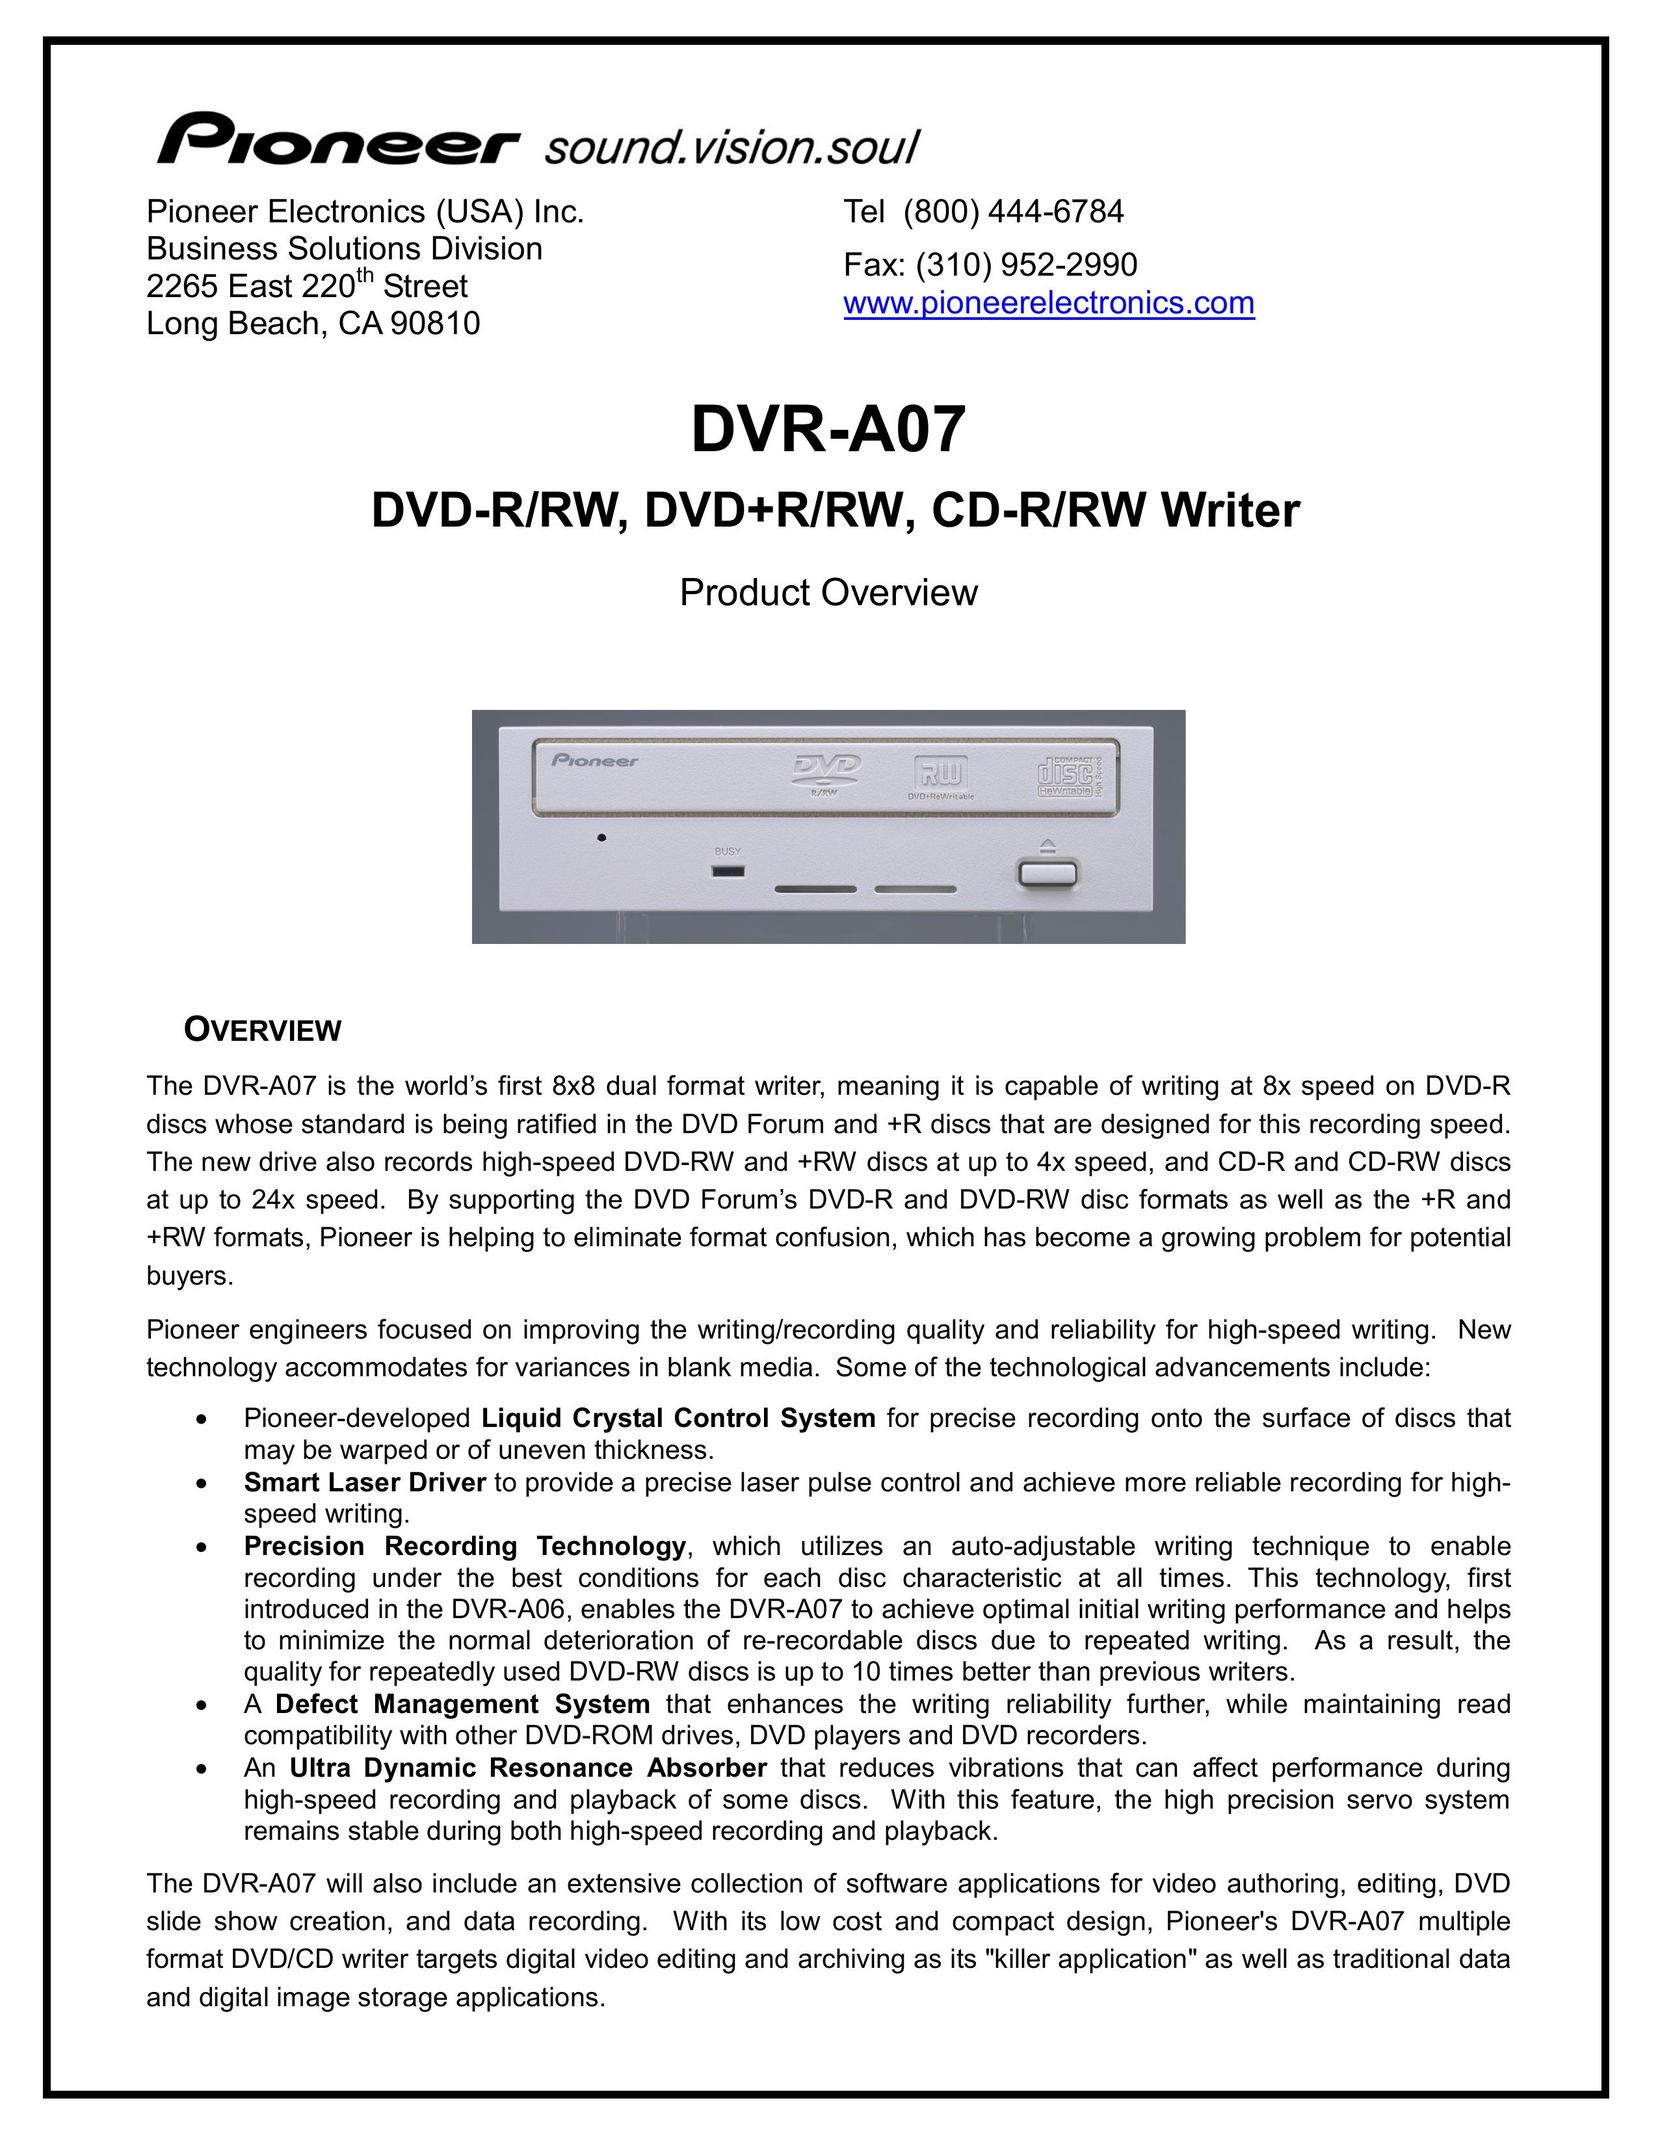 Pioneer DVR-107 Computer Drive User Manual